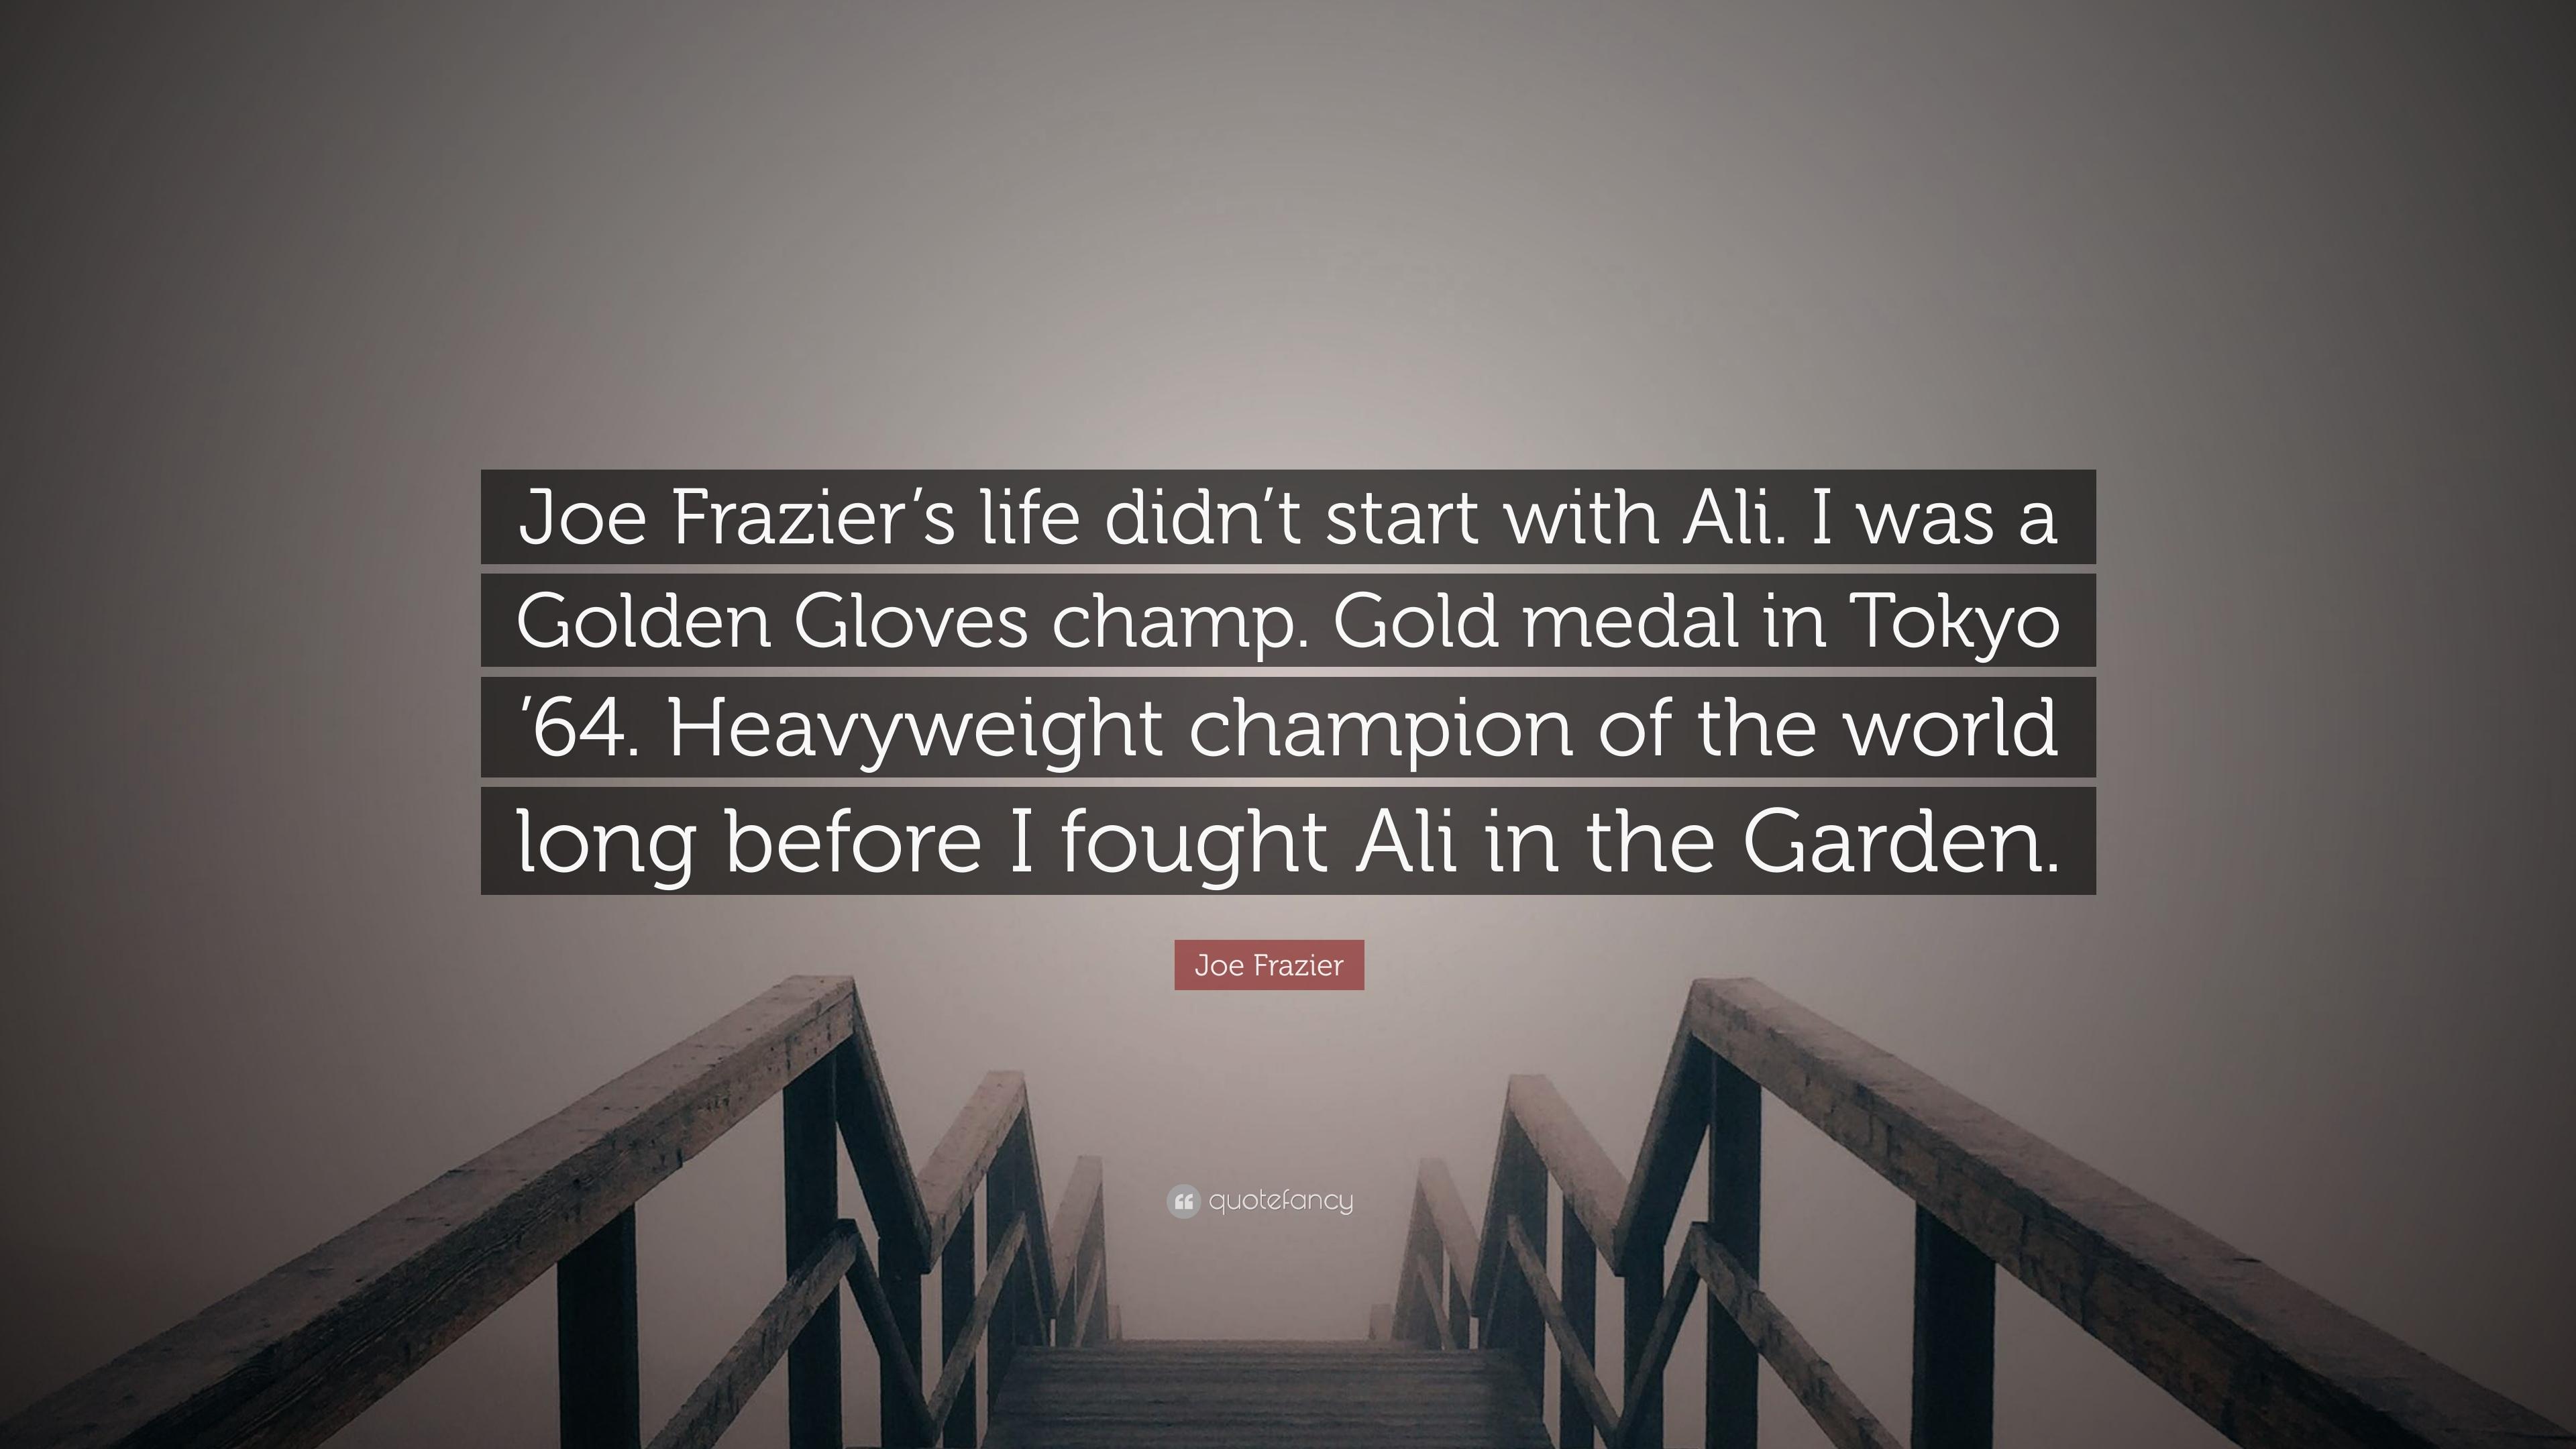 Joe Frazier Quote: “Joe Frazier's life didn't start with Ali. I was